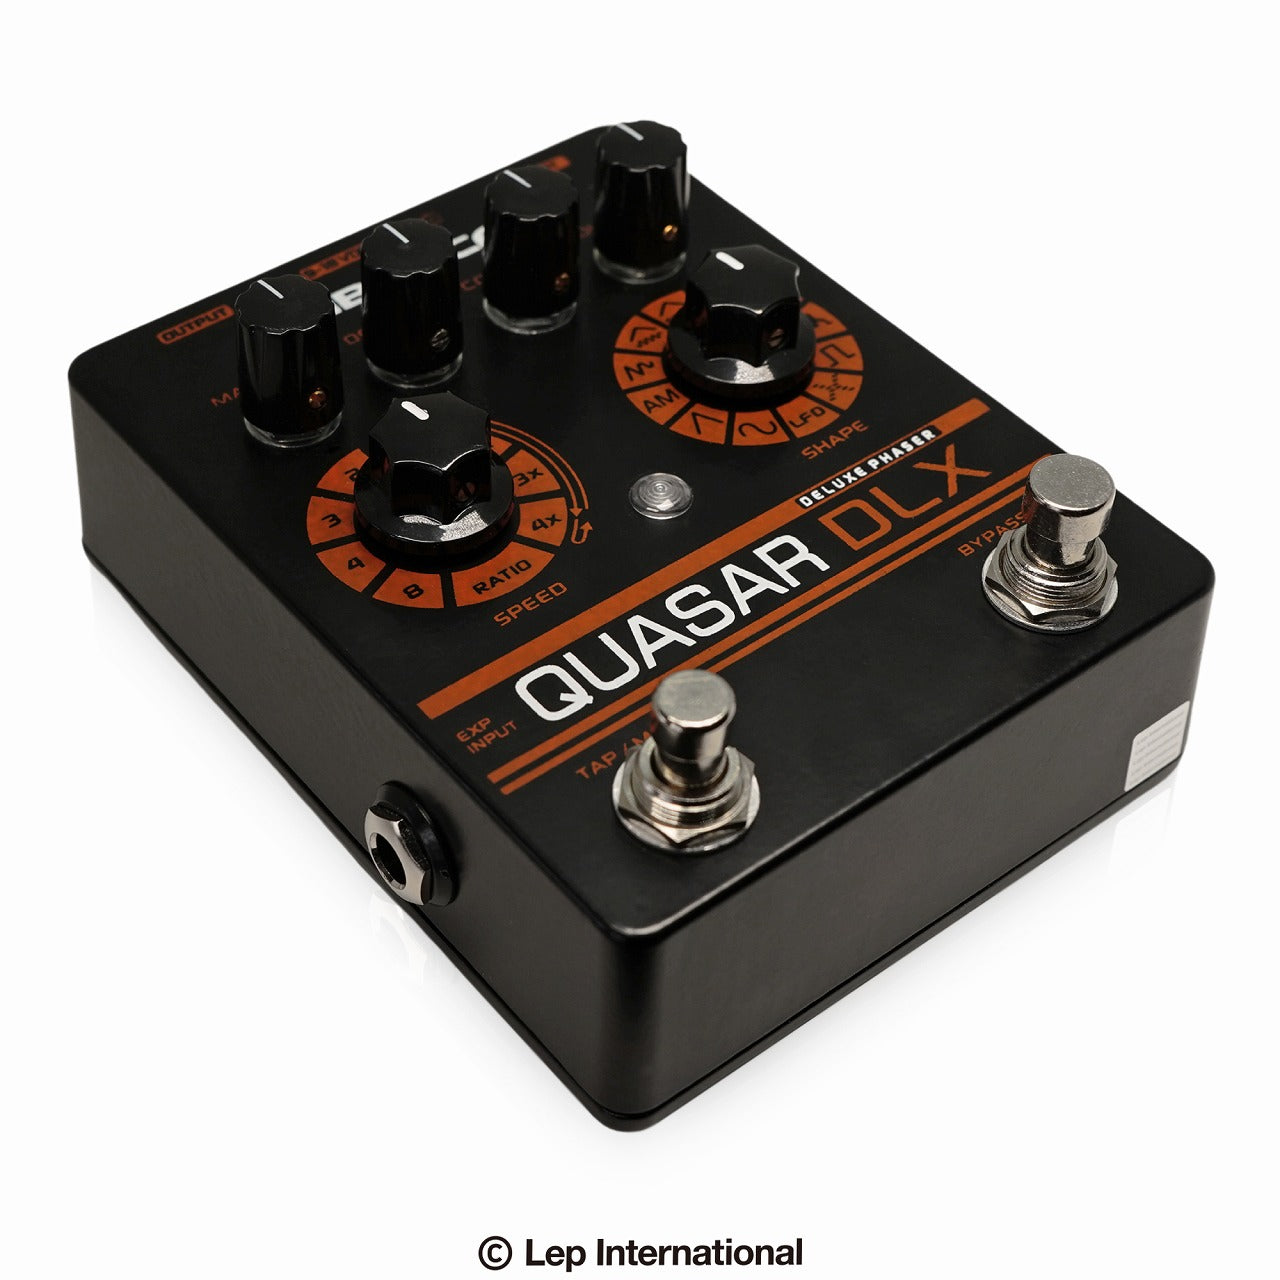 Subdecay　Quasar DLX　/ フェイザー ギター エフェクター